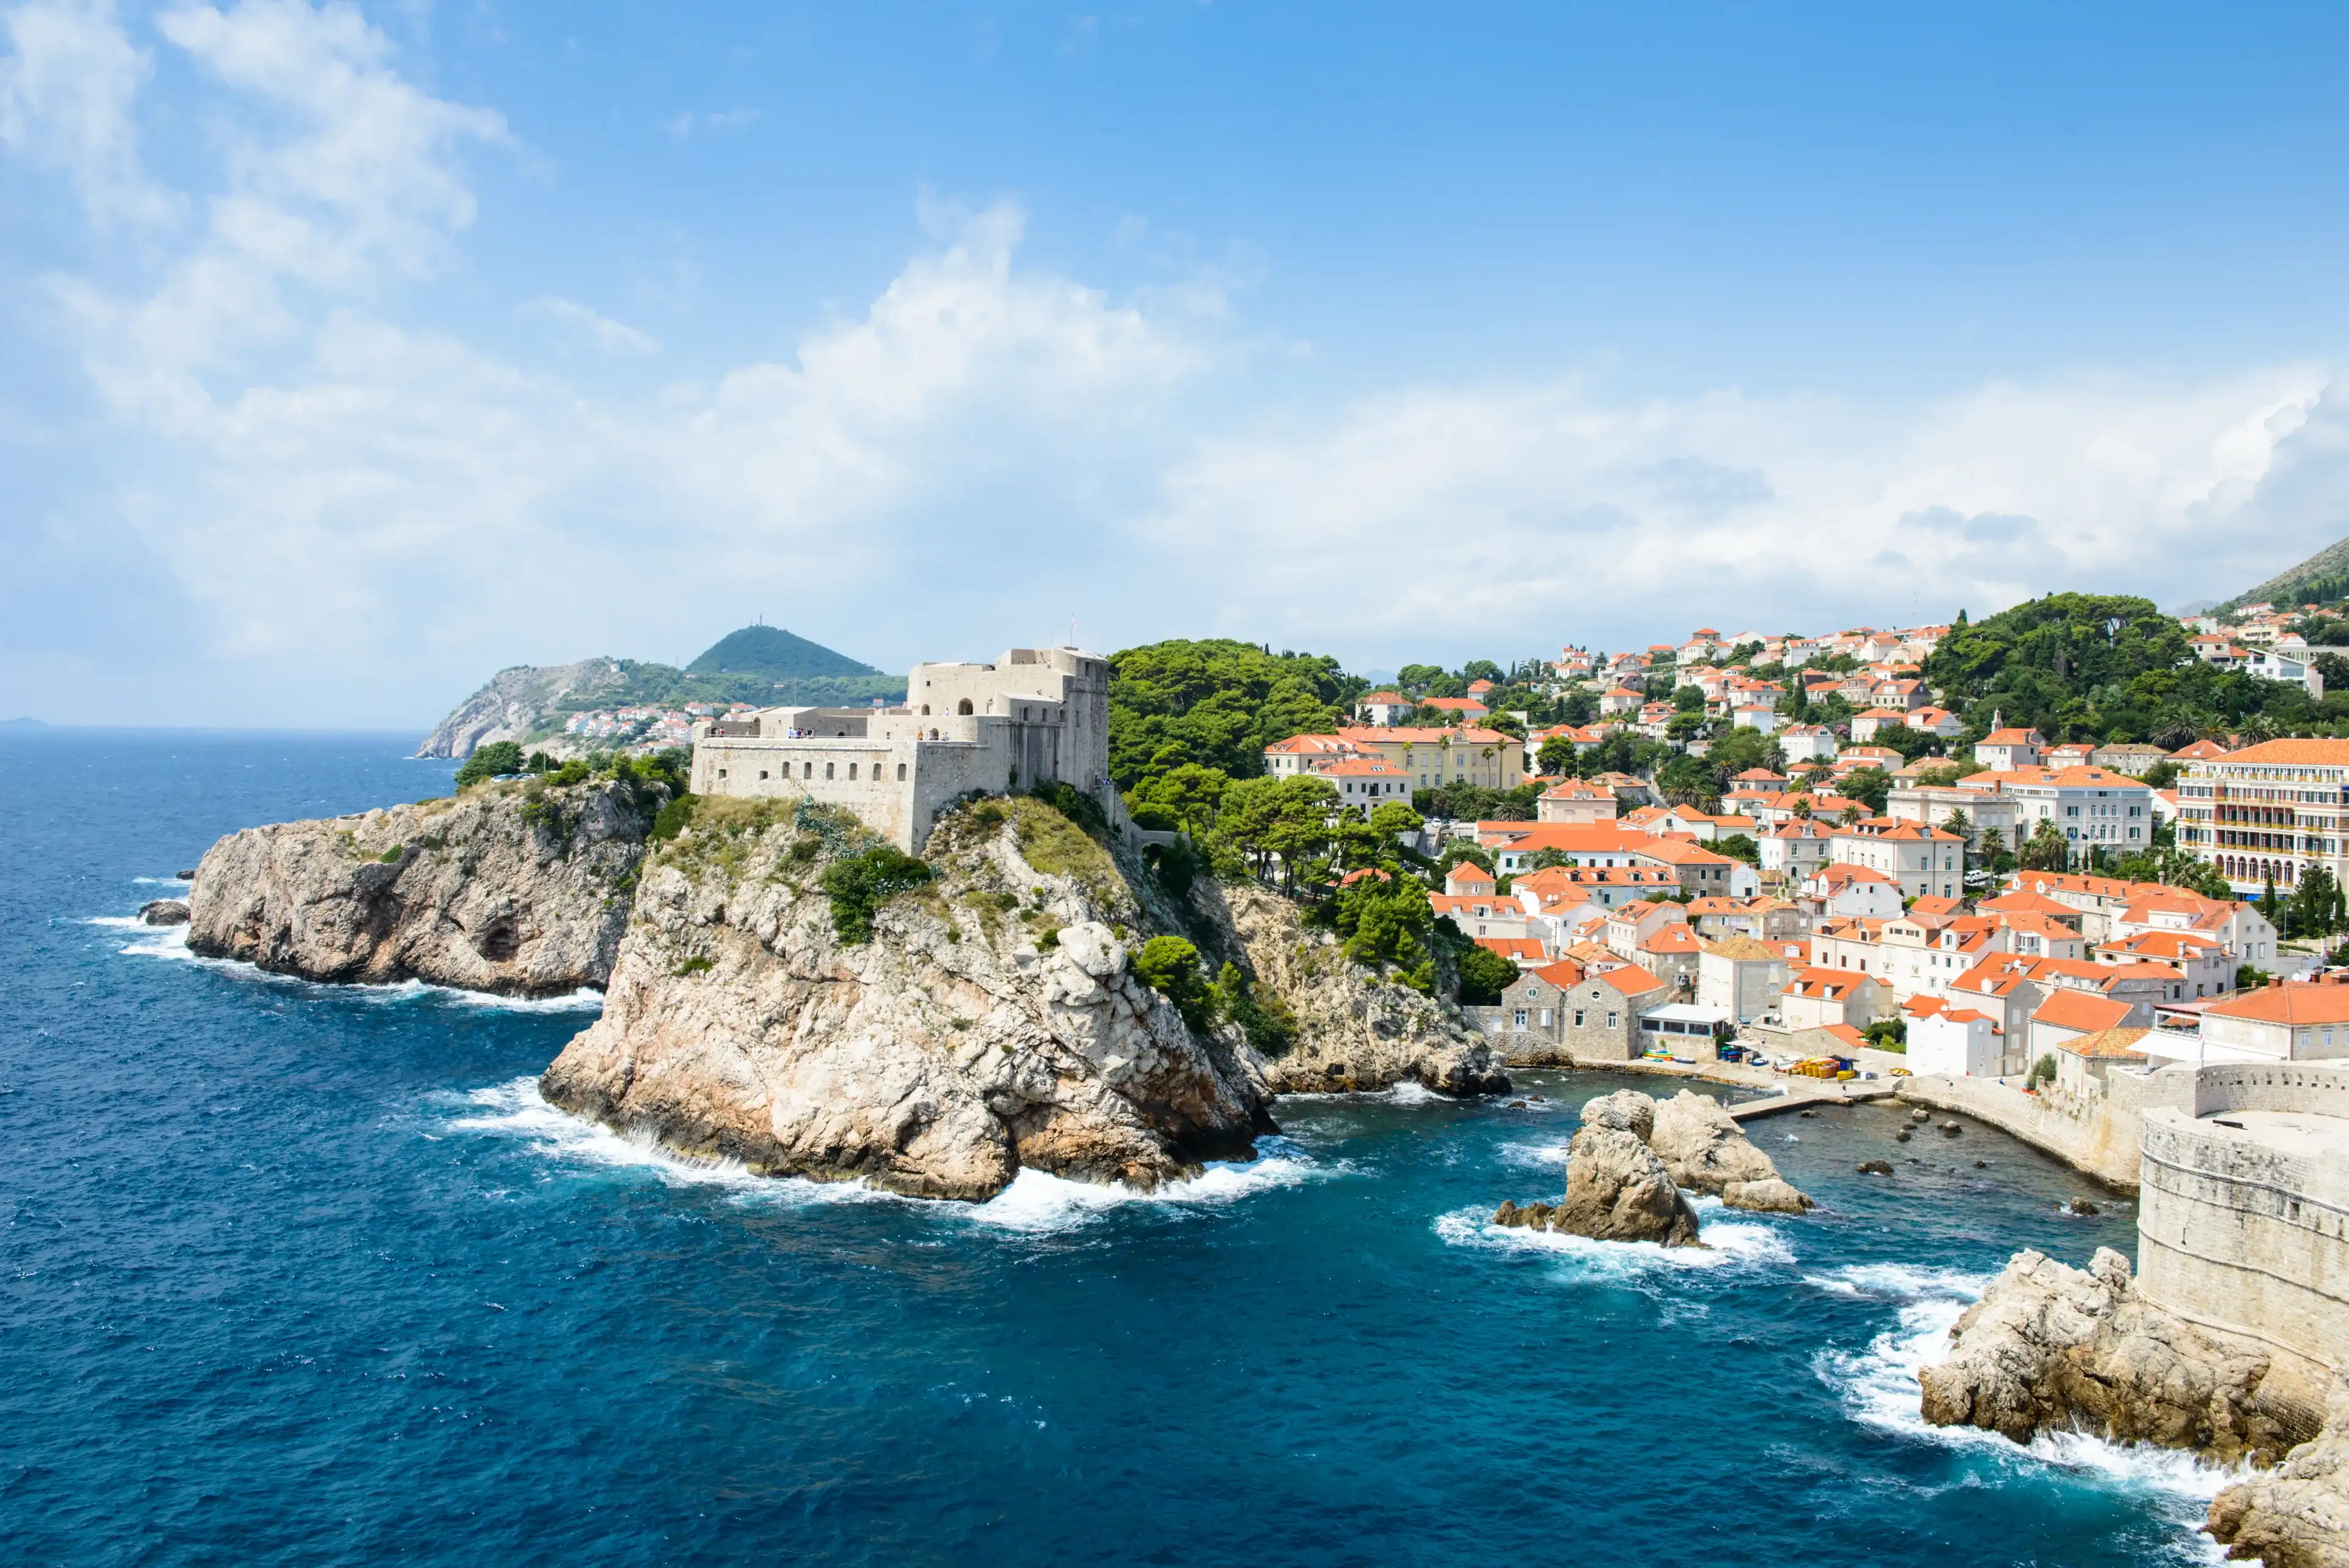 Dubrovnik-Neretva hotels. Best hotels in Dubrovnik-Neretva, Croatia